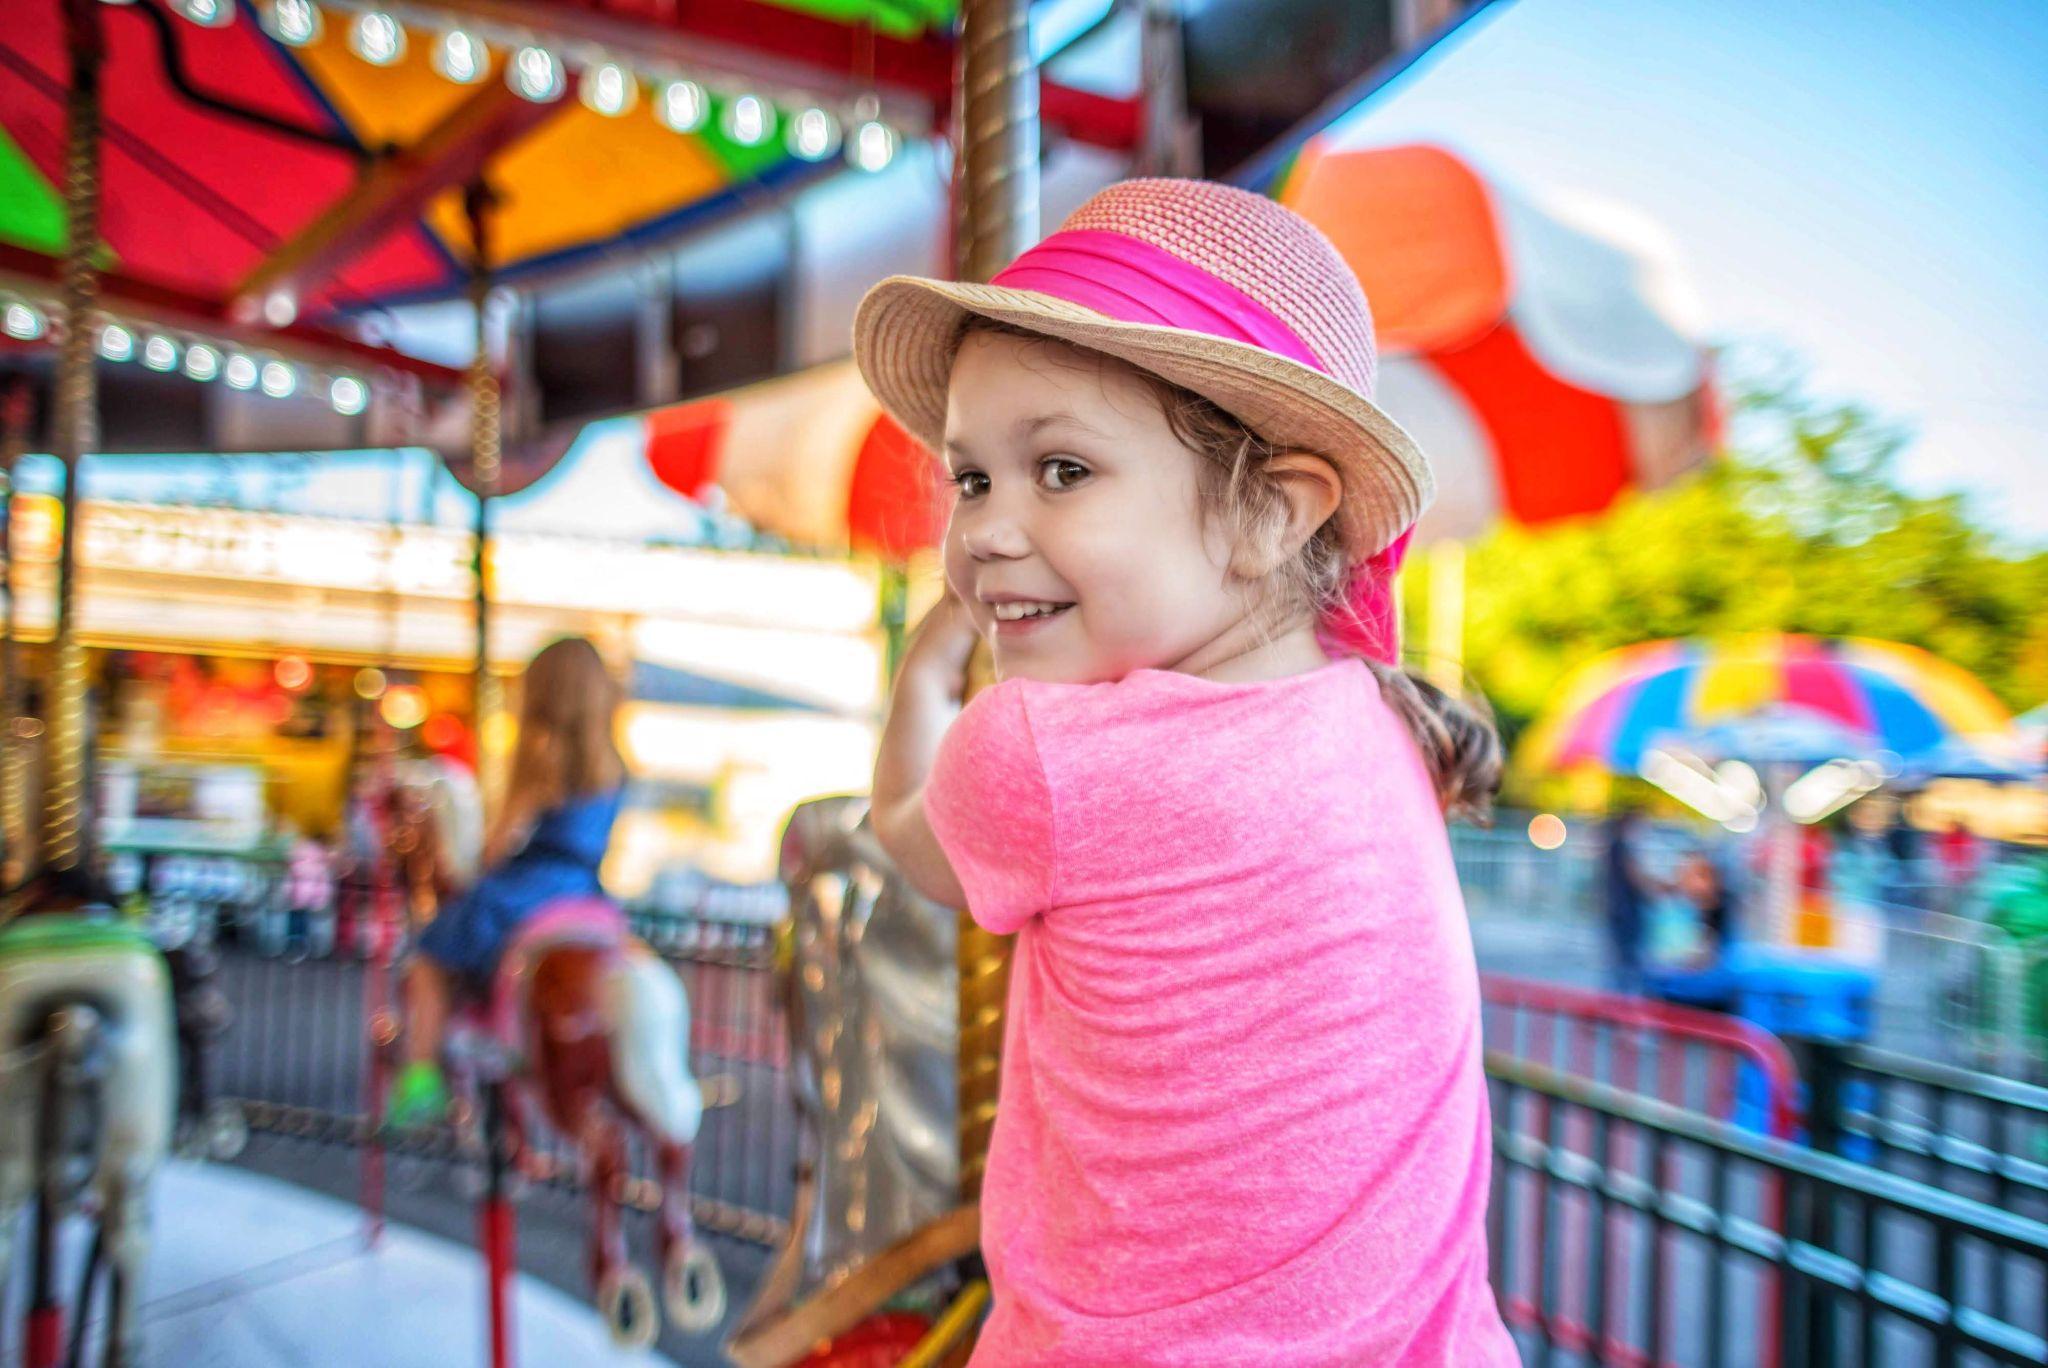 Little girl on a merry-go-round at an amusement park having fun